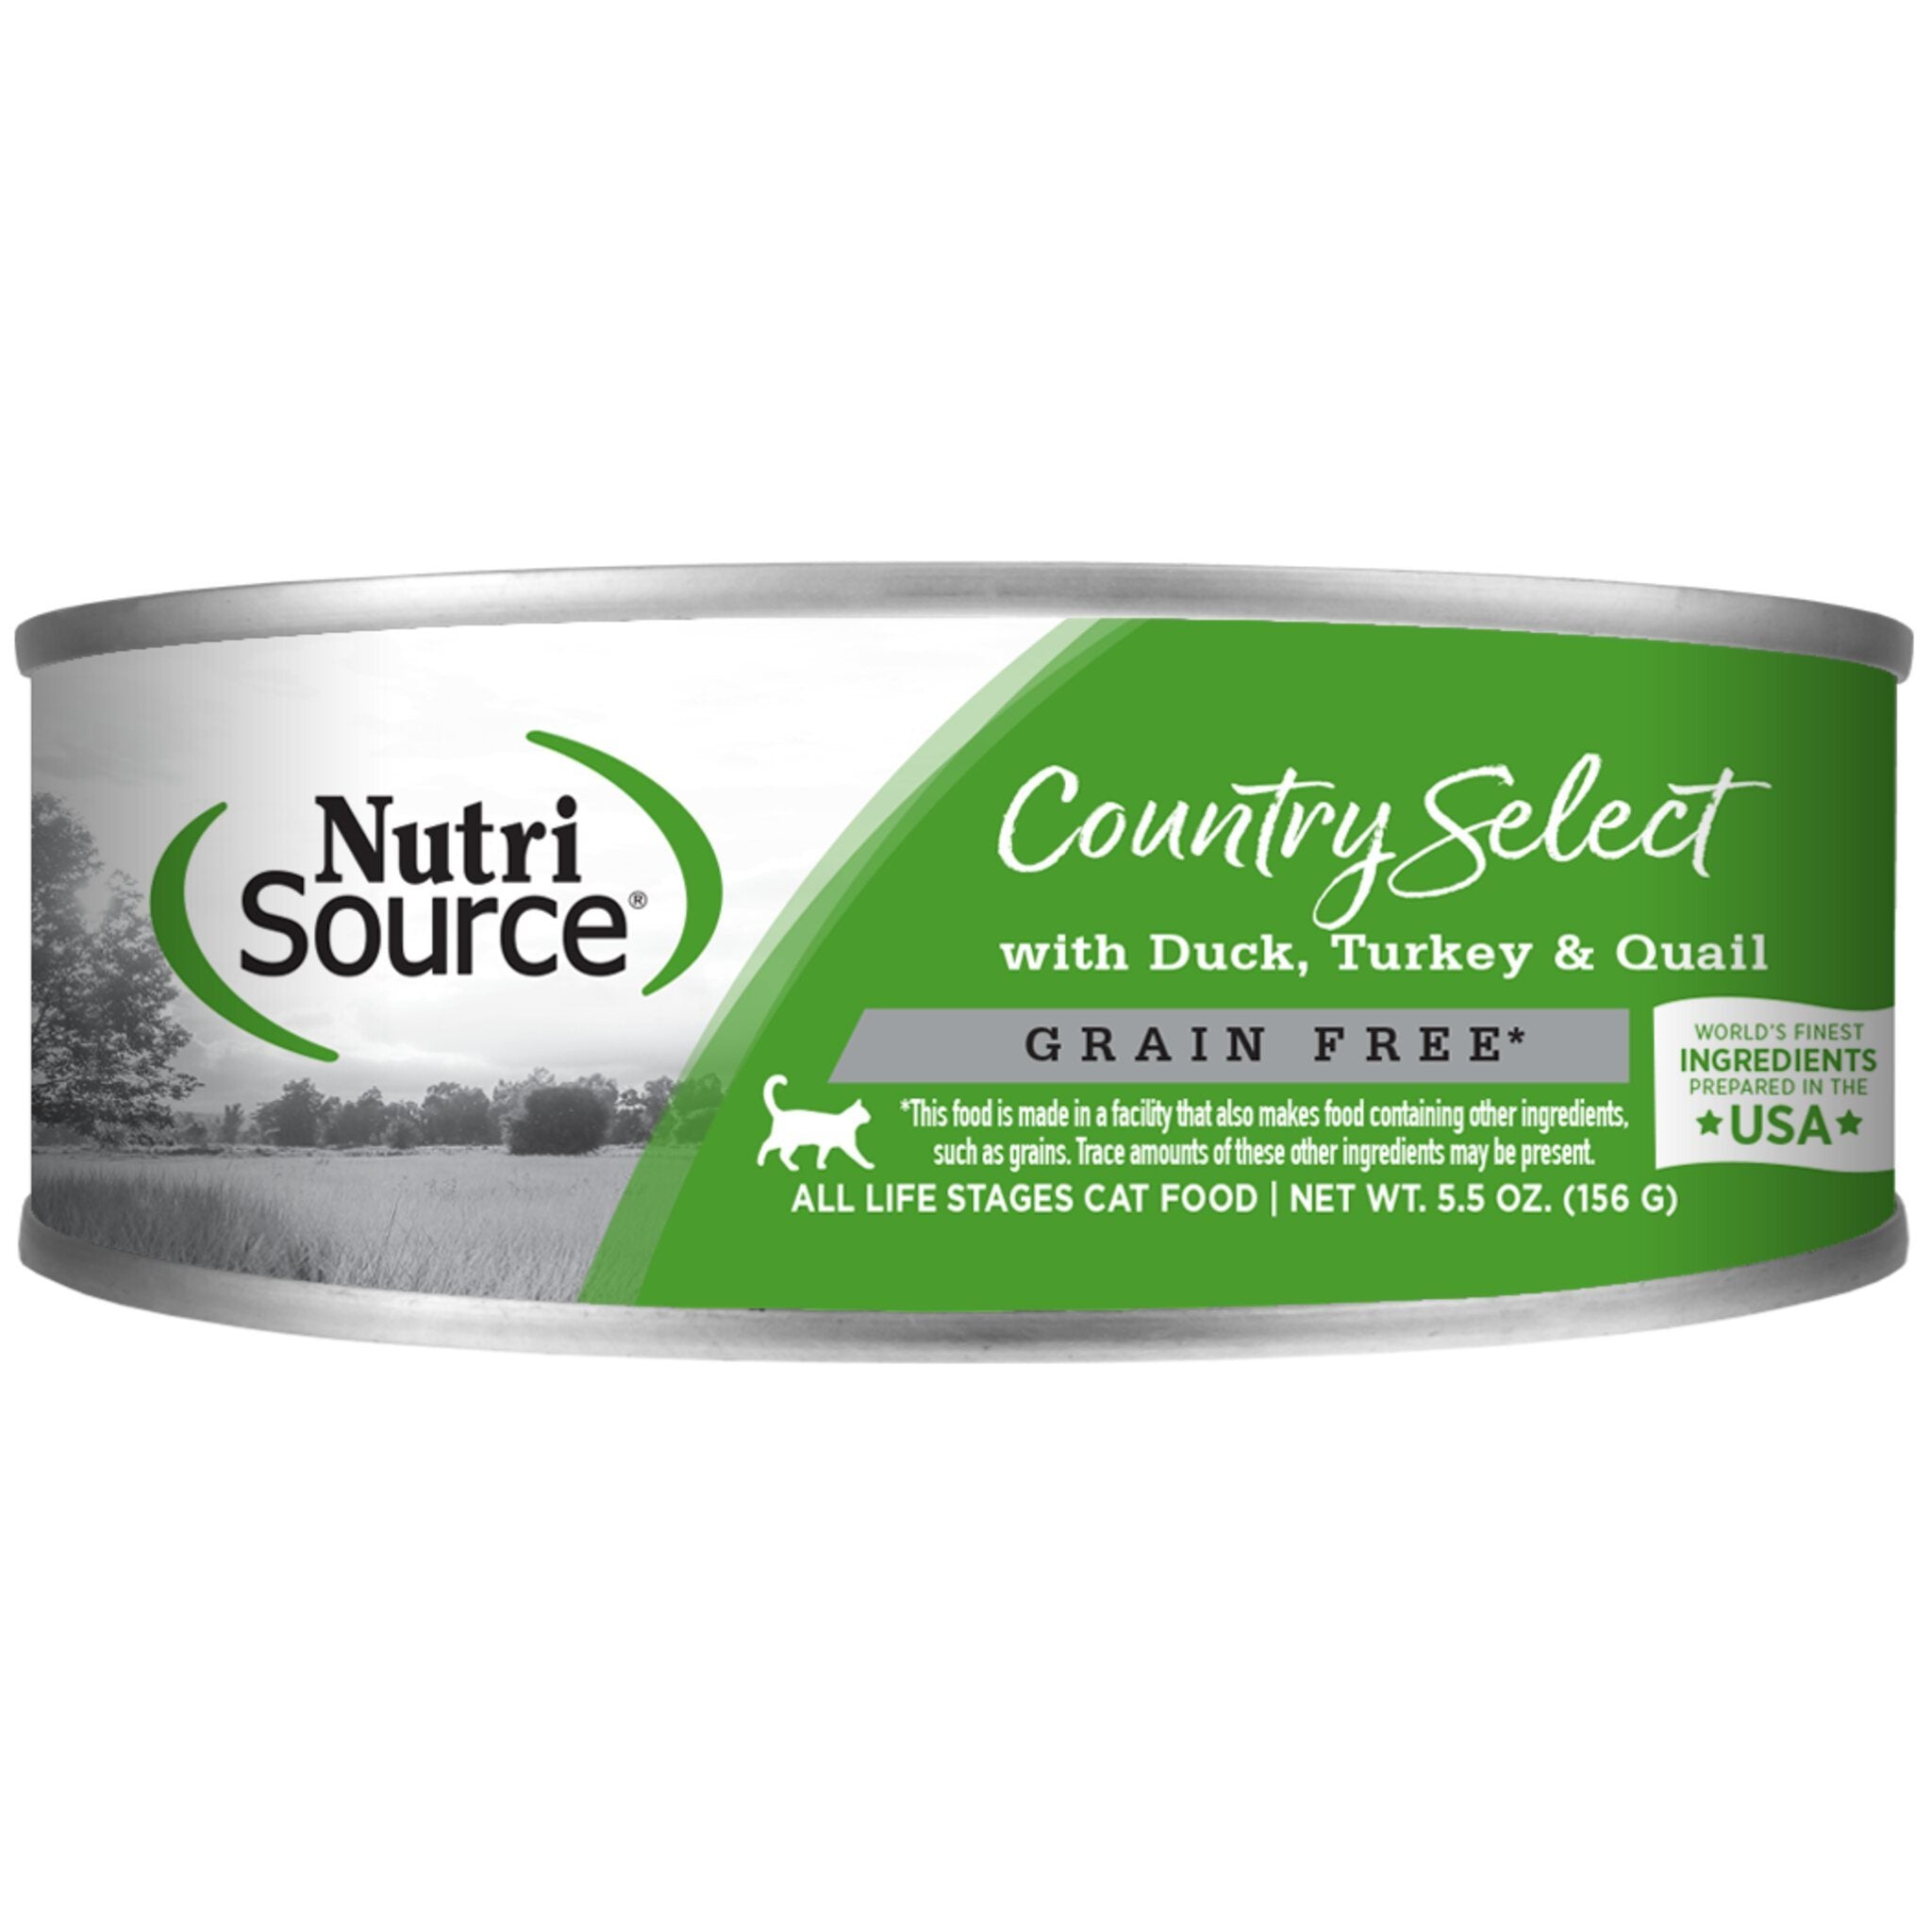 NutriSource Country Select Grain Free Duck, Turkey, & Quail Wet Cat Food 5.5 oz